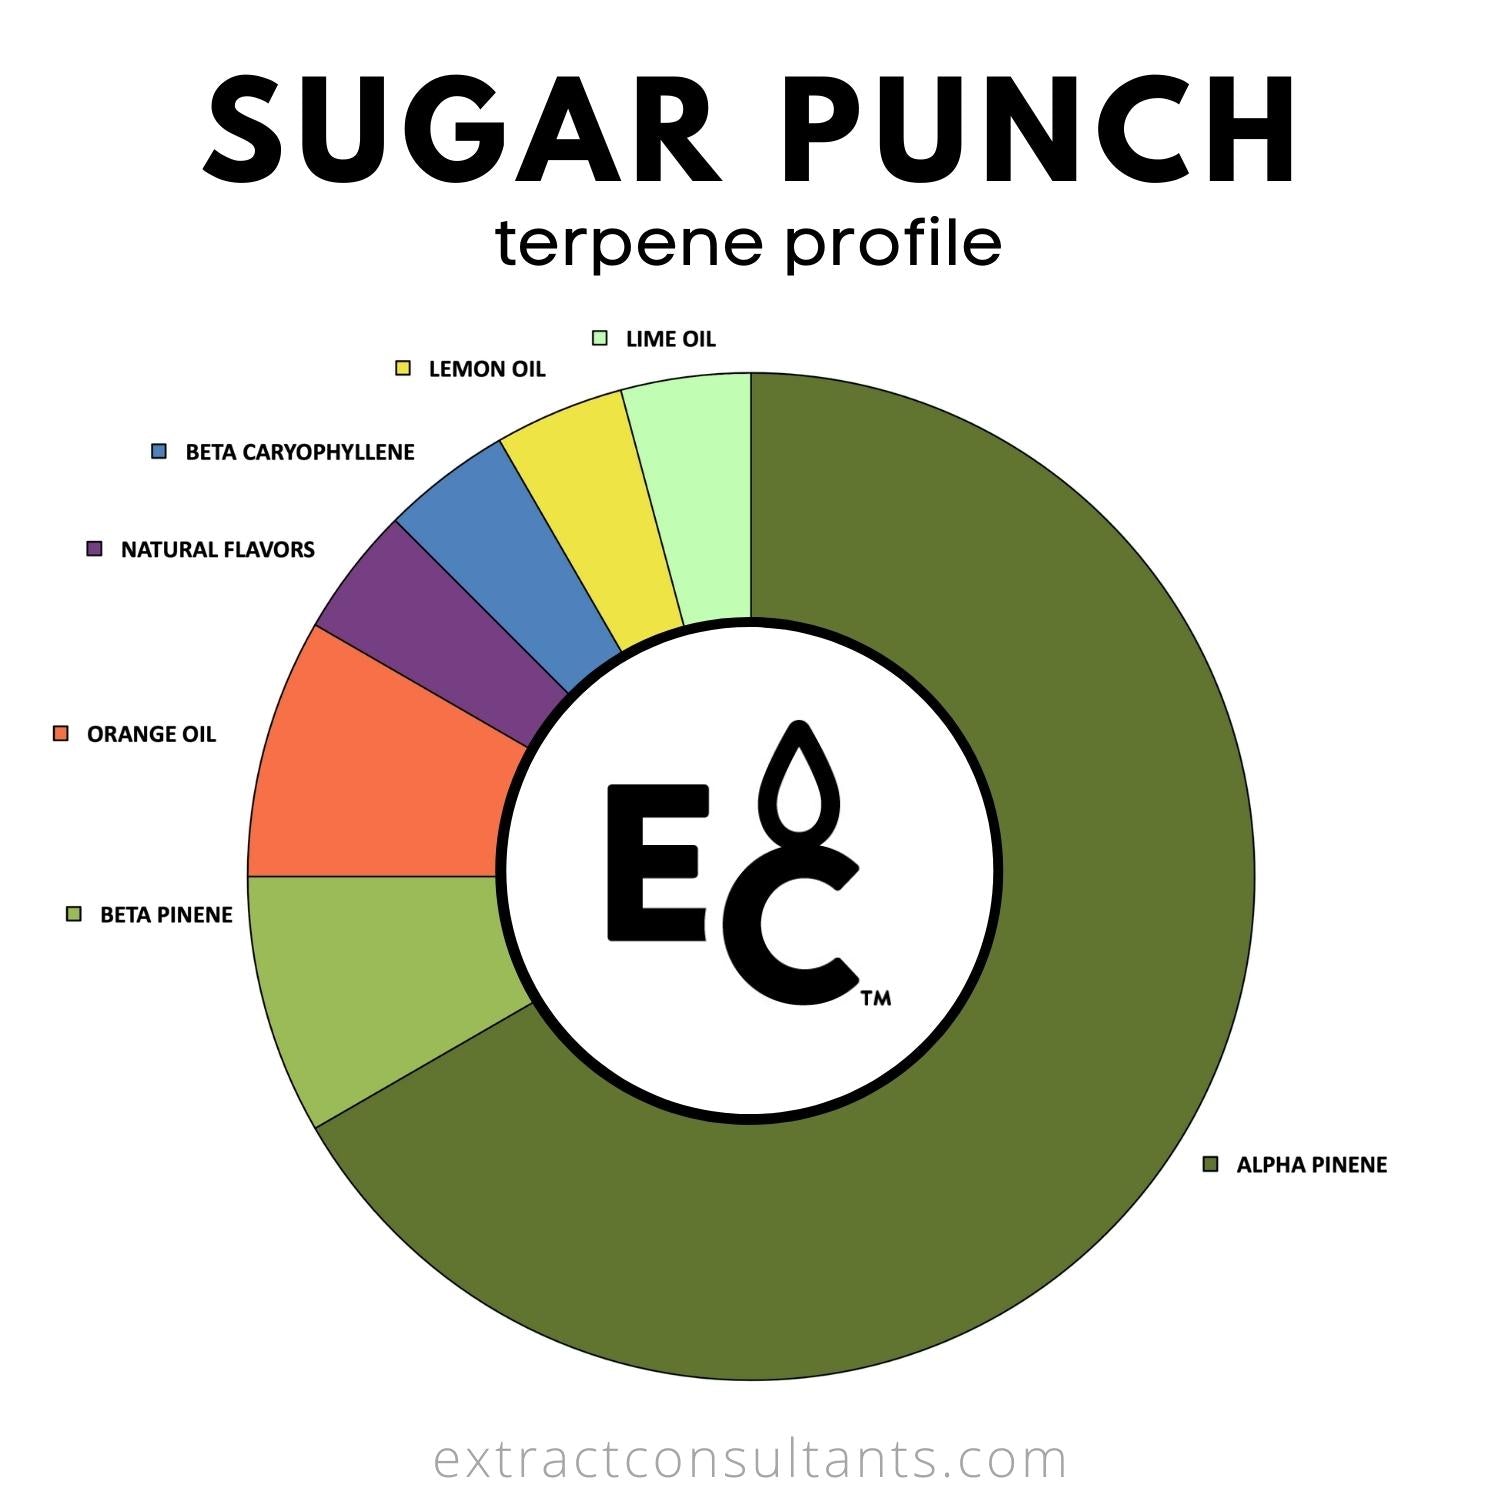 Sugar punch terpene profile chart